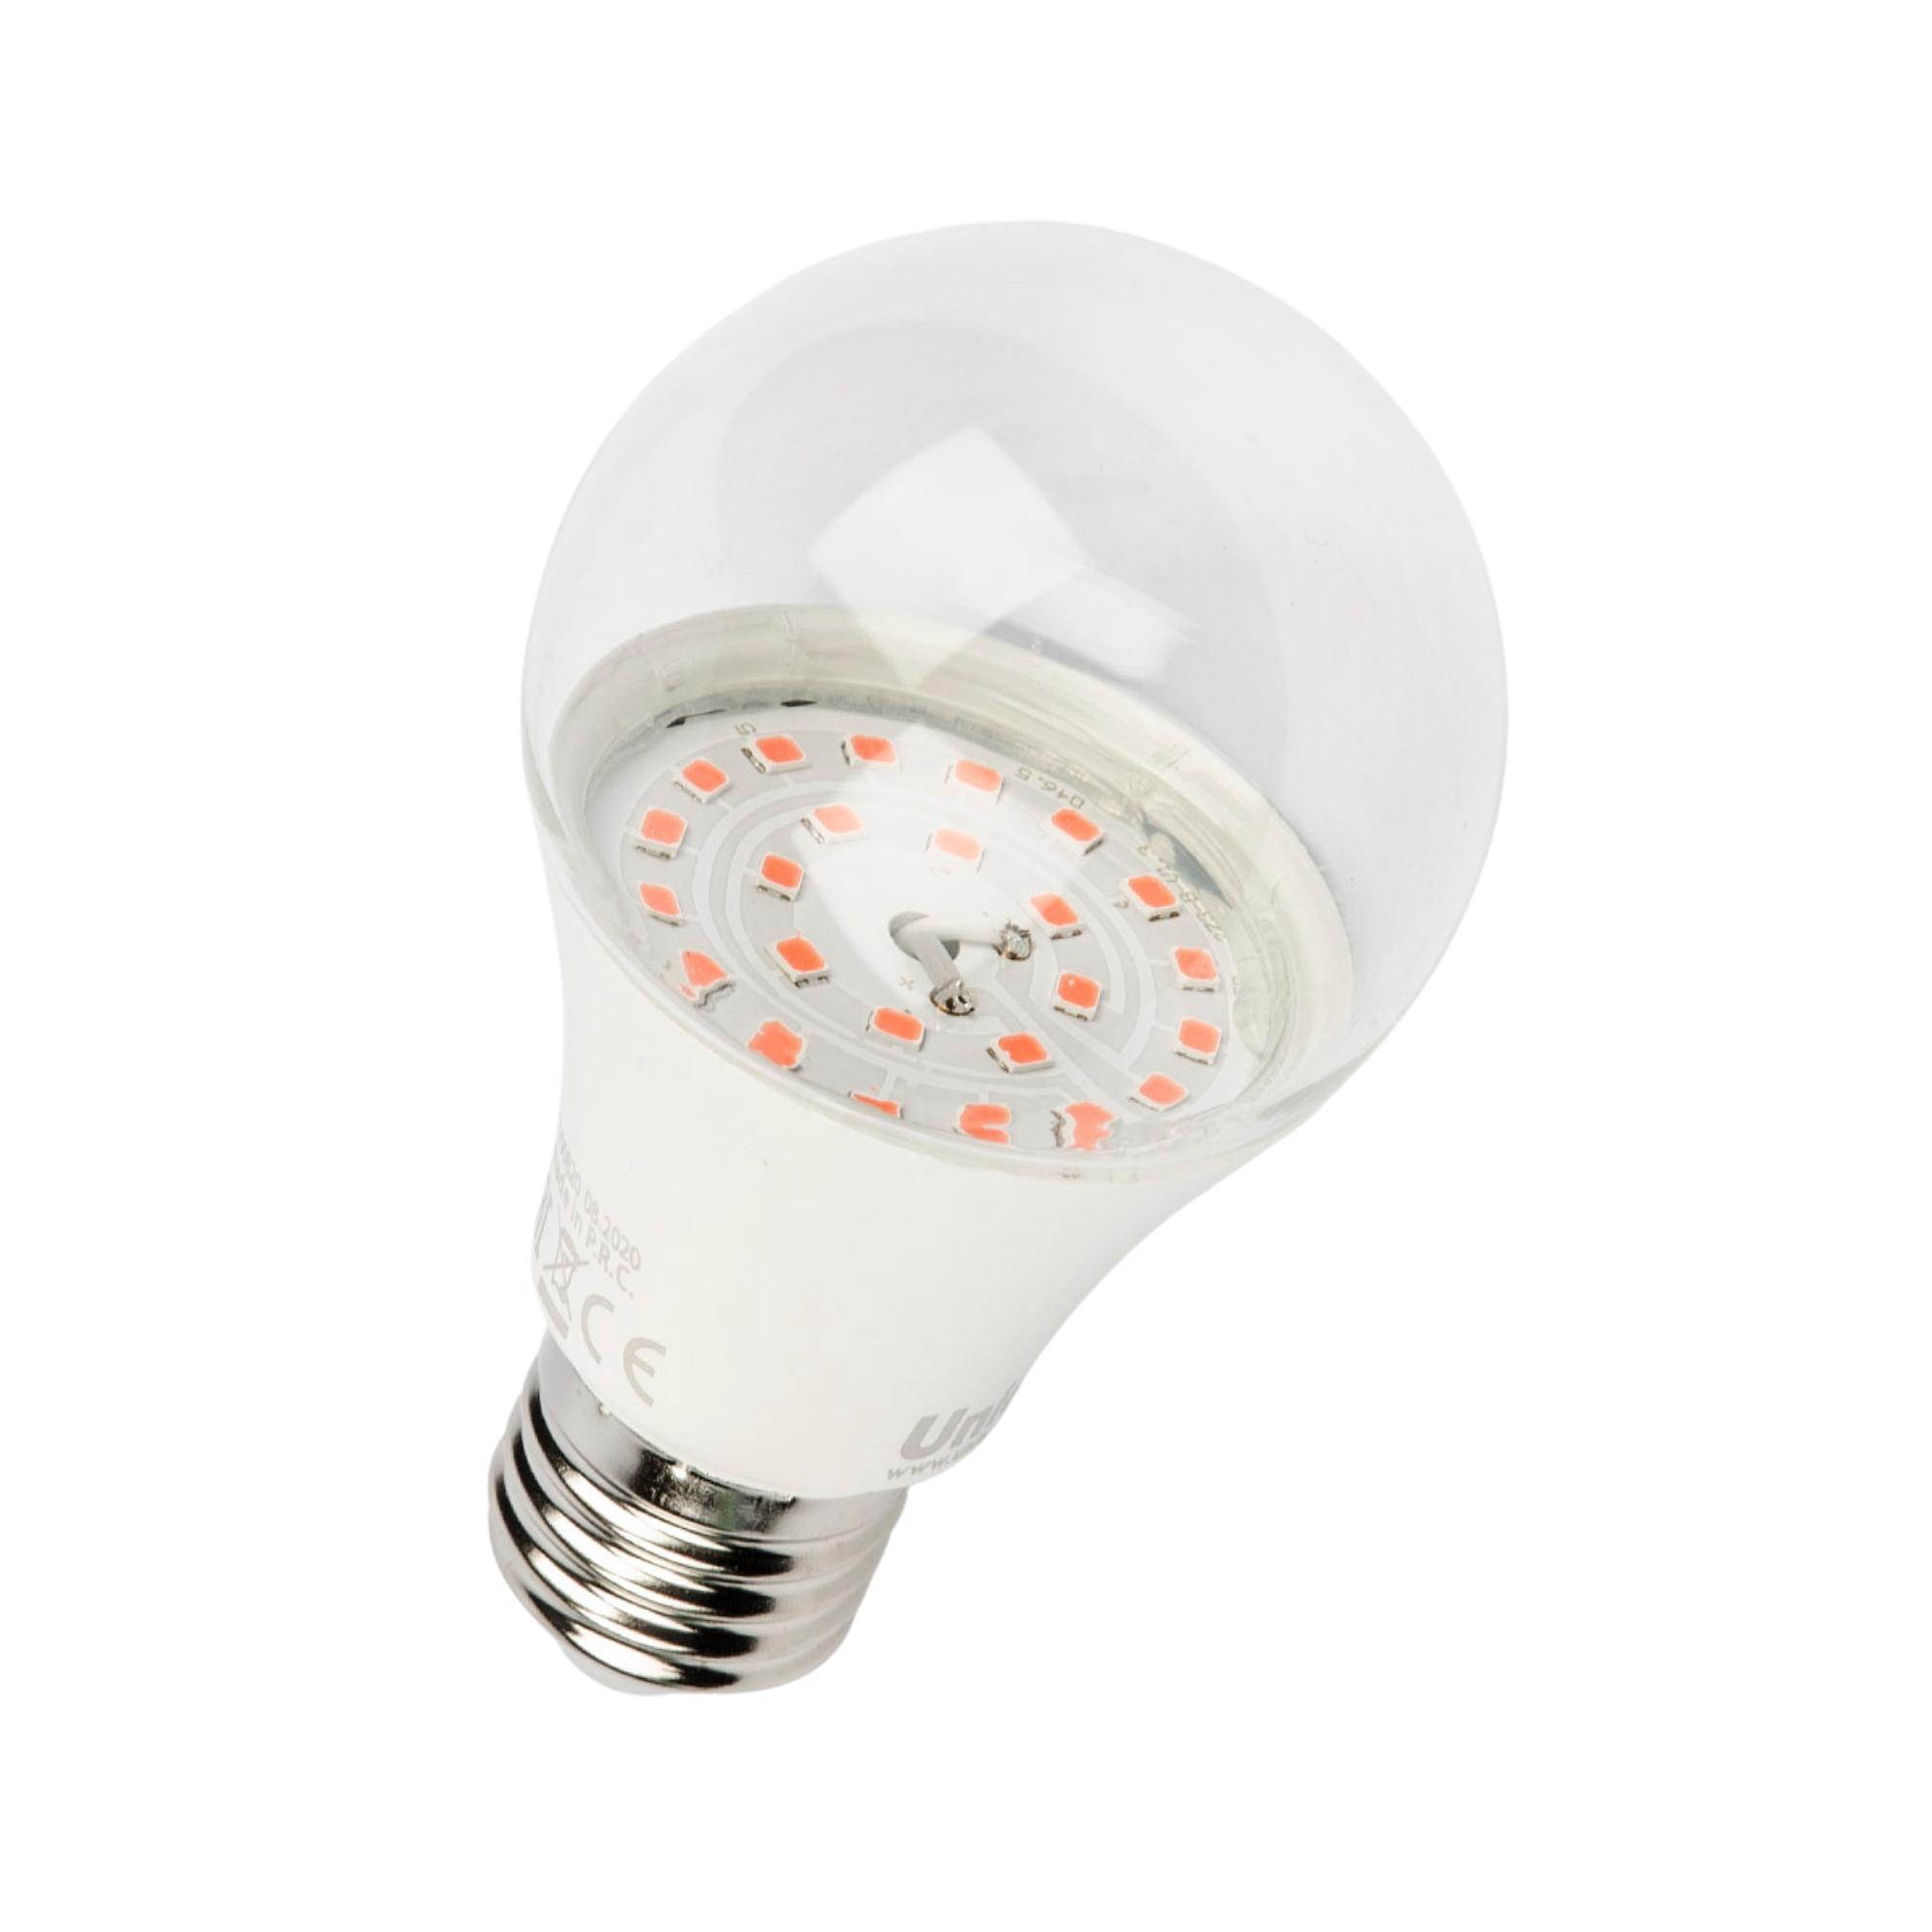 LED-A60-9W-SP-E27-CL ALM01WH Лампа светодиодная для растений. Форма A. прозрачная колба. Материал корпуса пластик. Упаковка картон.